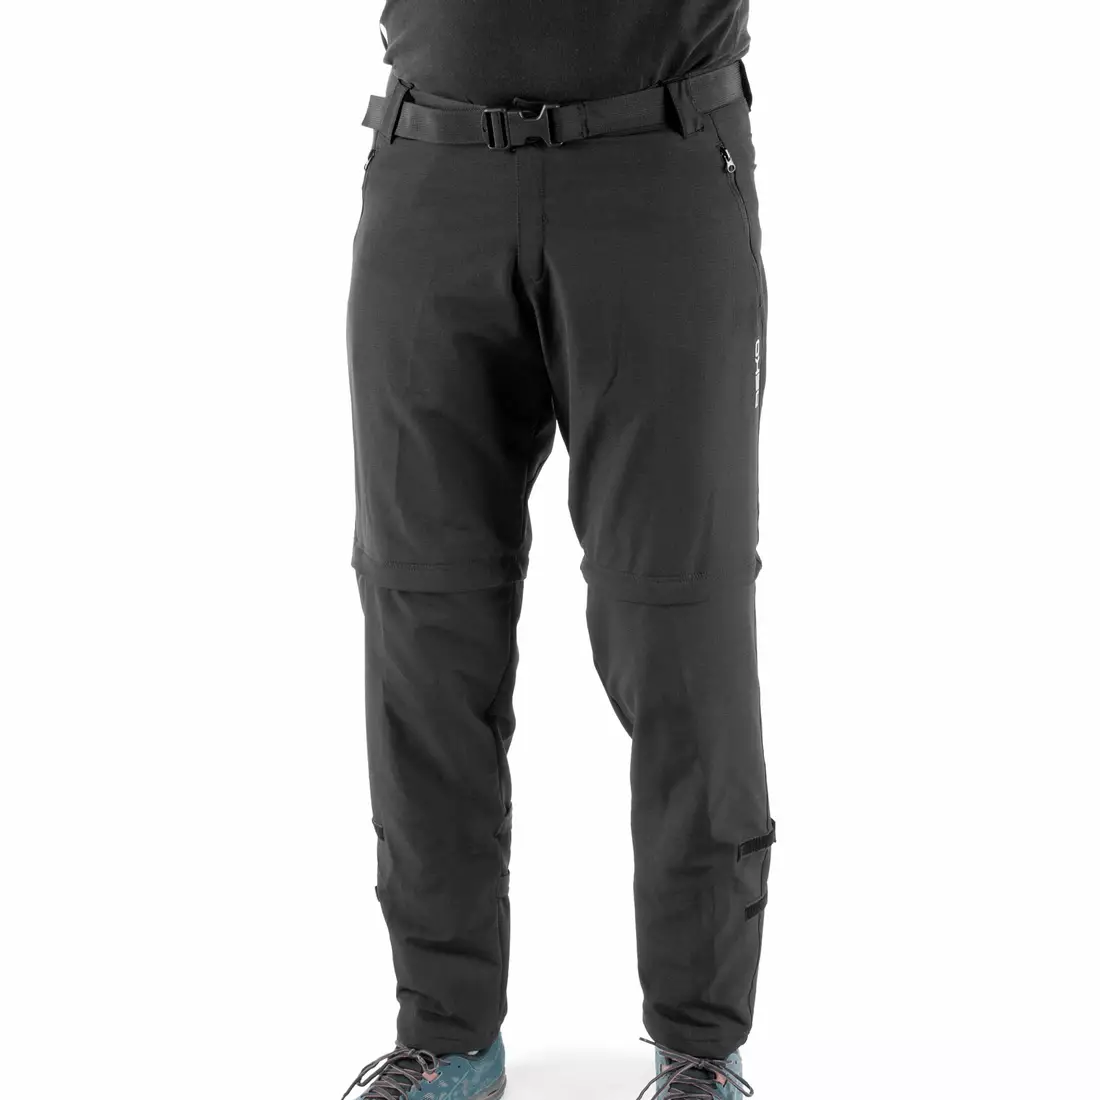 DEKO STR-M-001 male bicycle pants with detachable legs, black